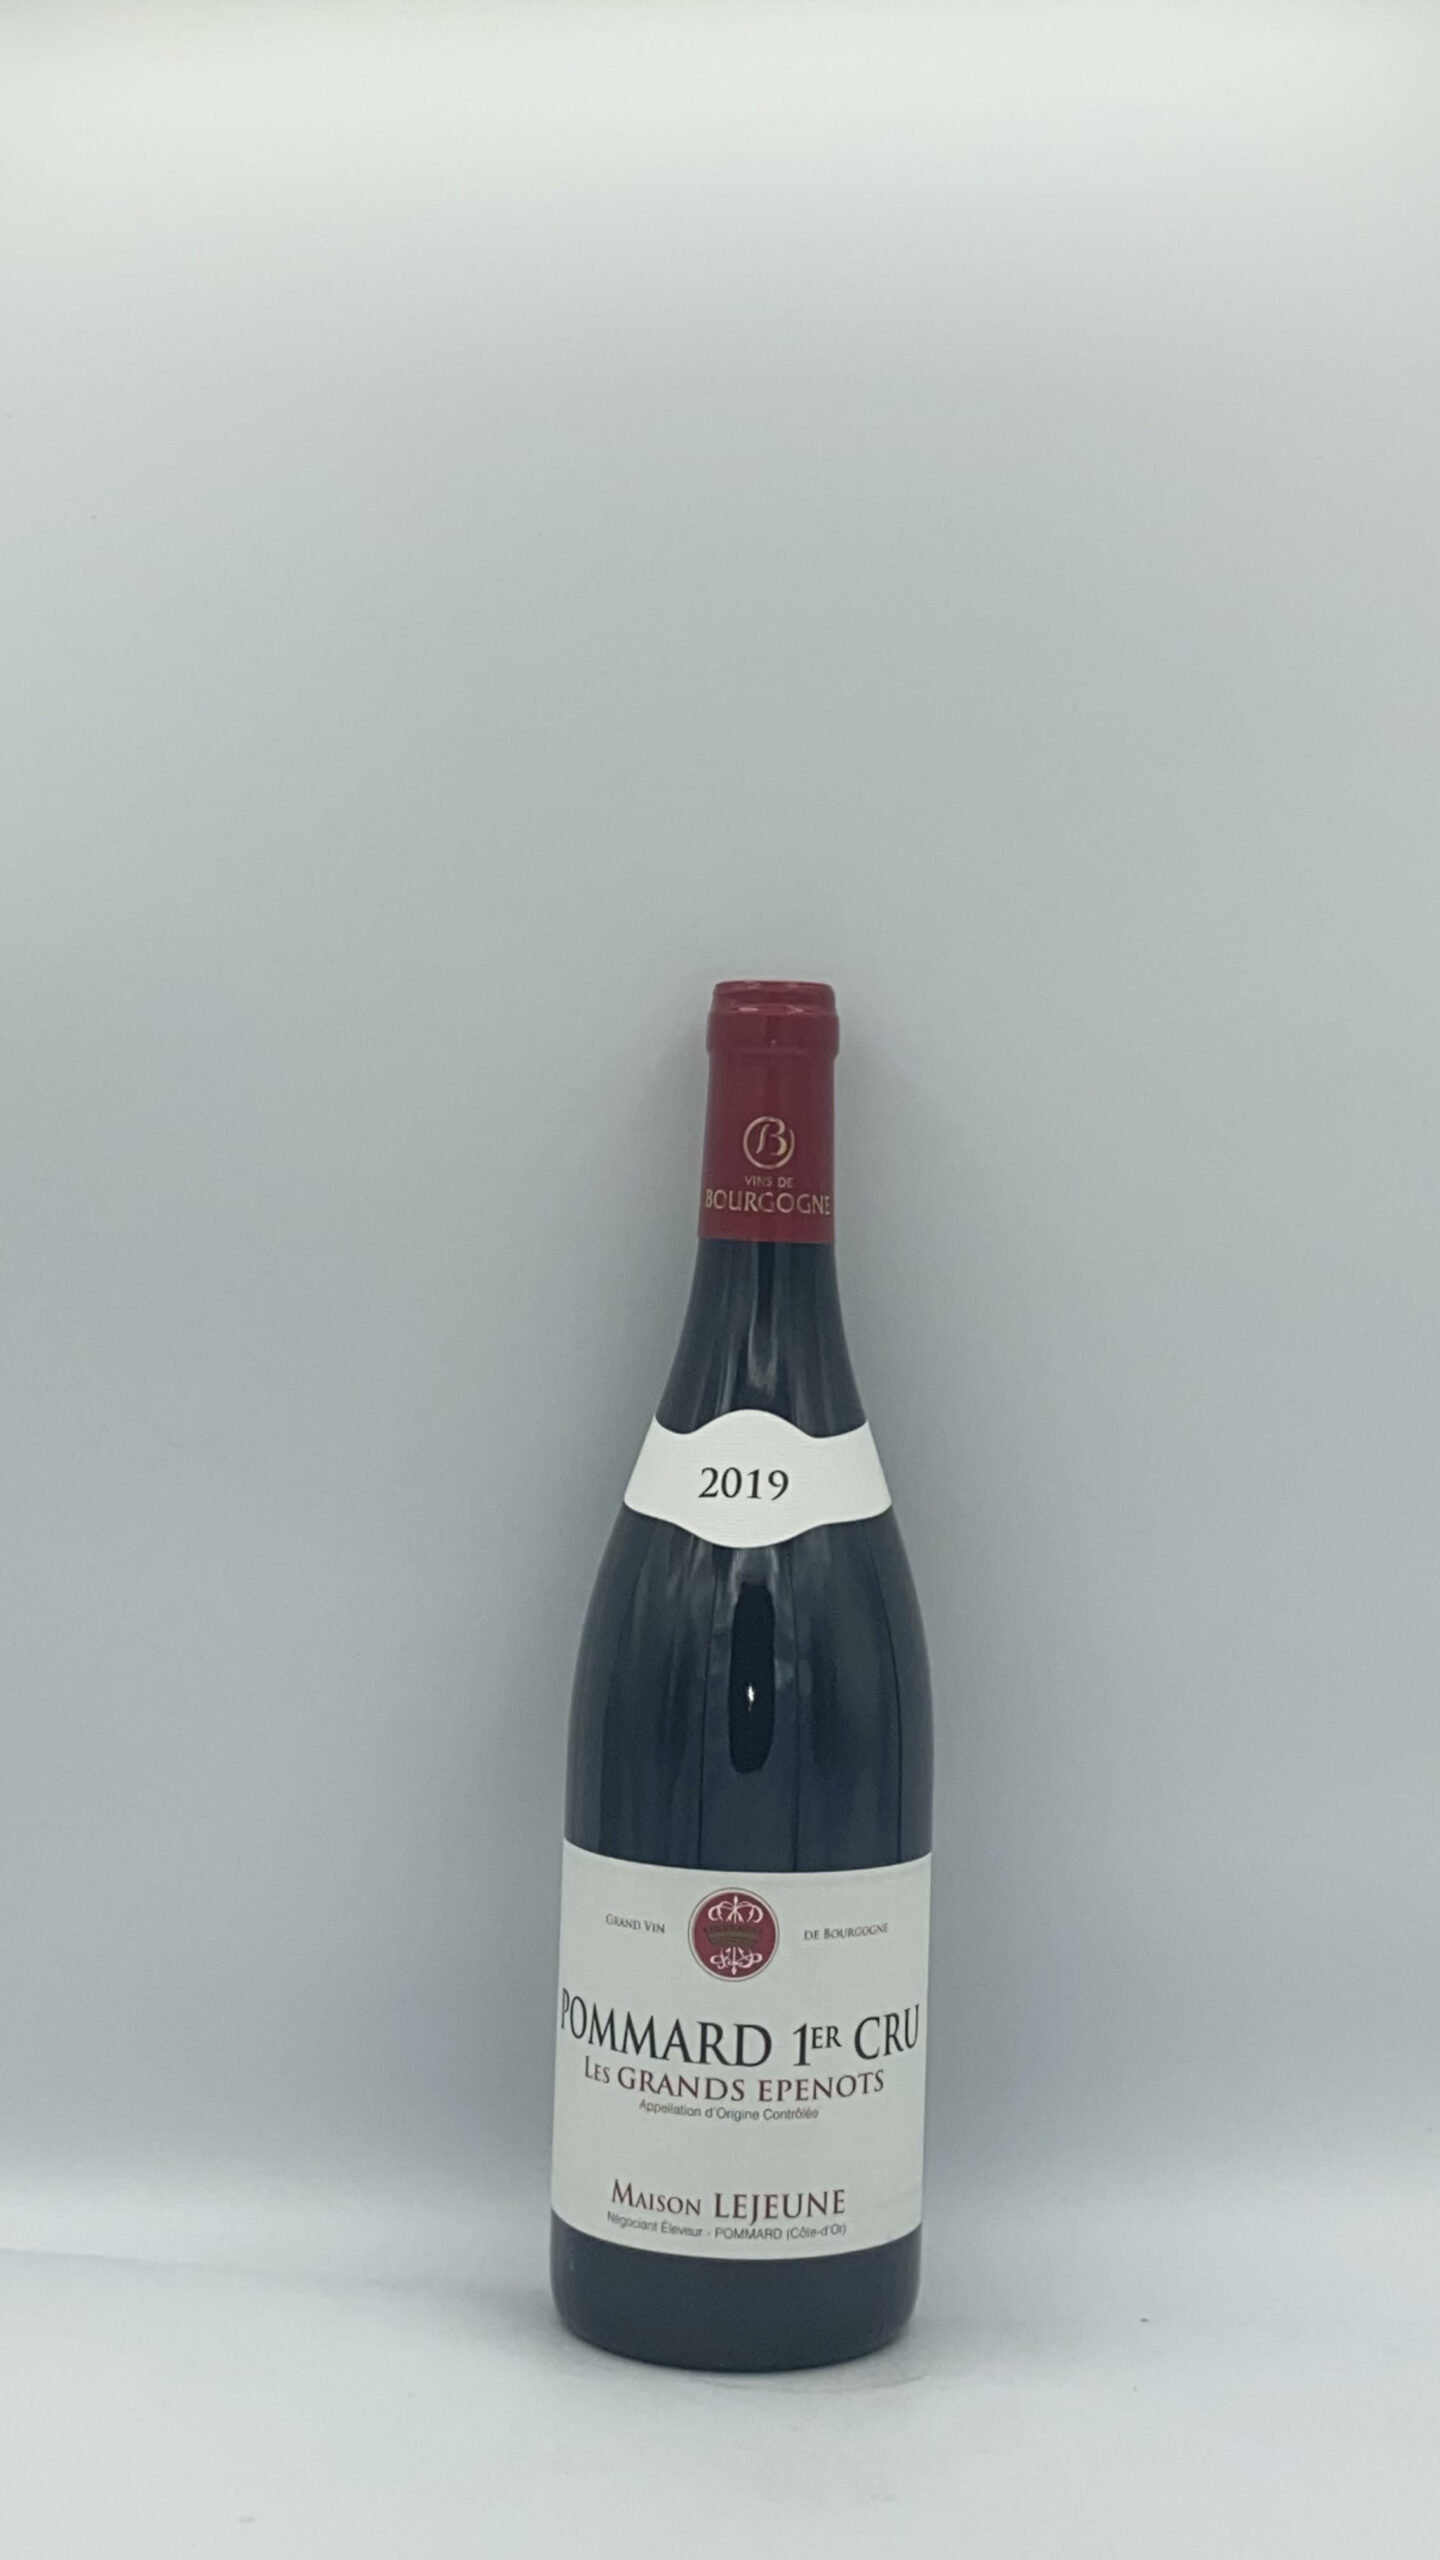 Bourgogne Pommard 1er cru “Grands Epenots” 2019 Domaine Lejeune